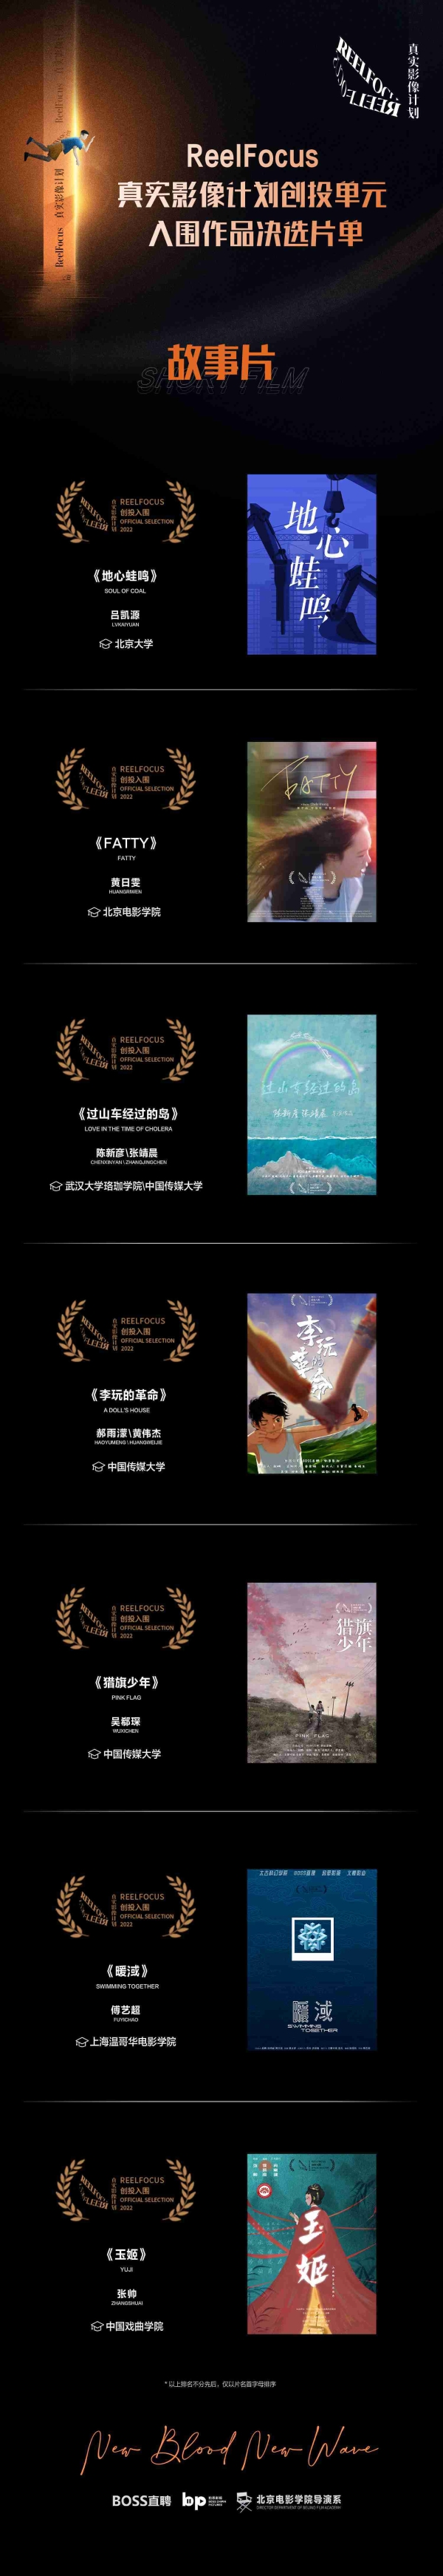 ReelFocus真实影像计划加盟北京国际电影节，BOSS直聘助力大学生职业之路 